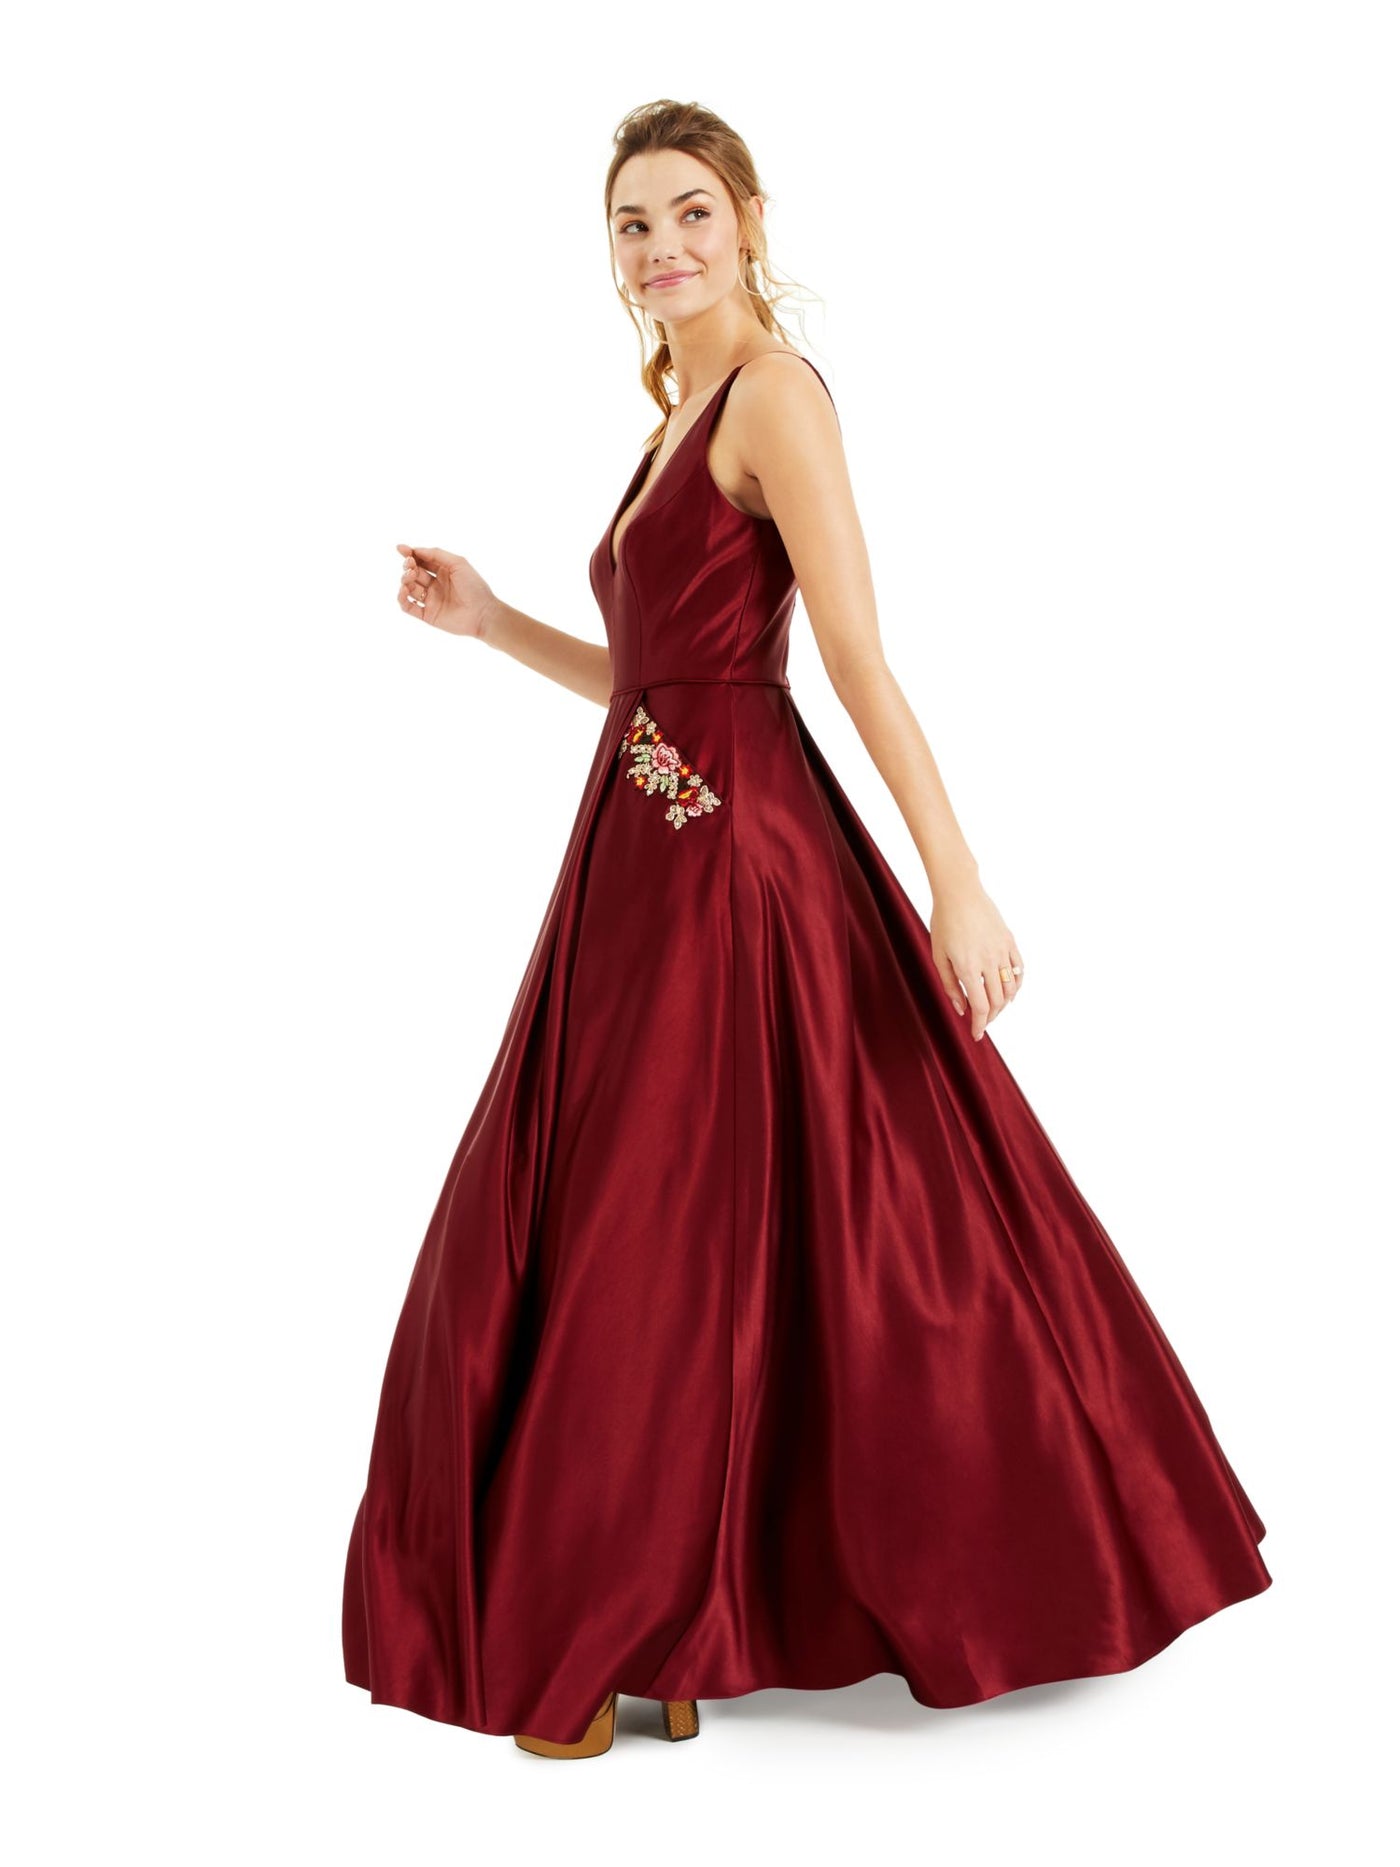 BLONDIE Womens Embellished Pocketed Satin Ballgown Spaghetti Strap V Neck Full-Length Formal A-Line Dress